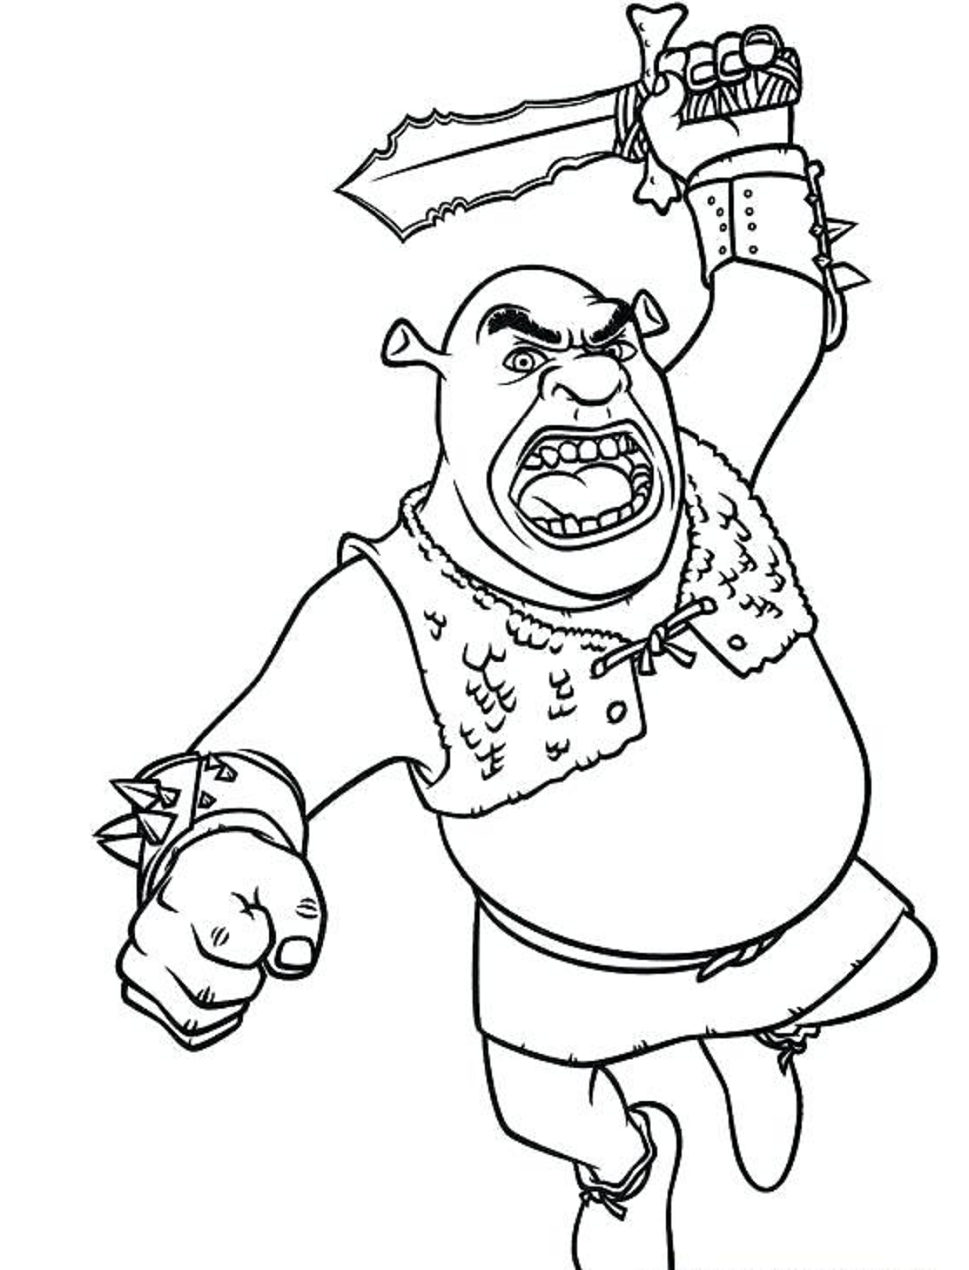 Dibujos de Ogro Shrek Luchando para colorear